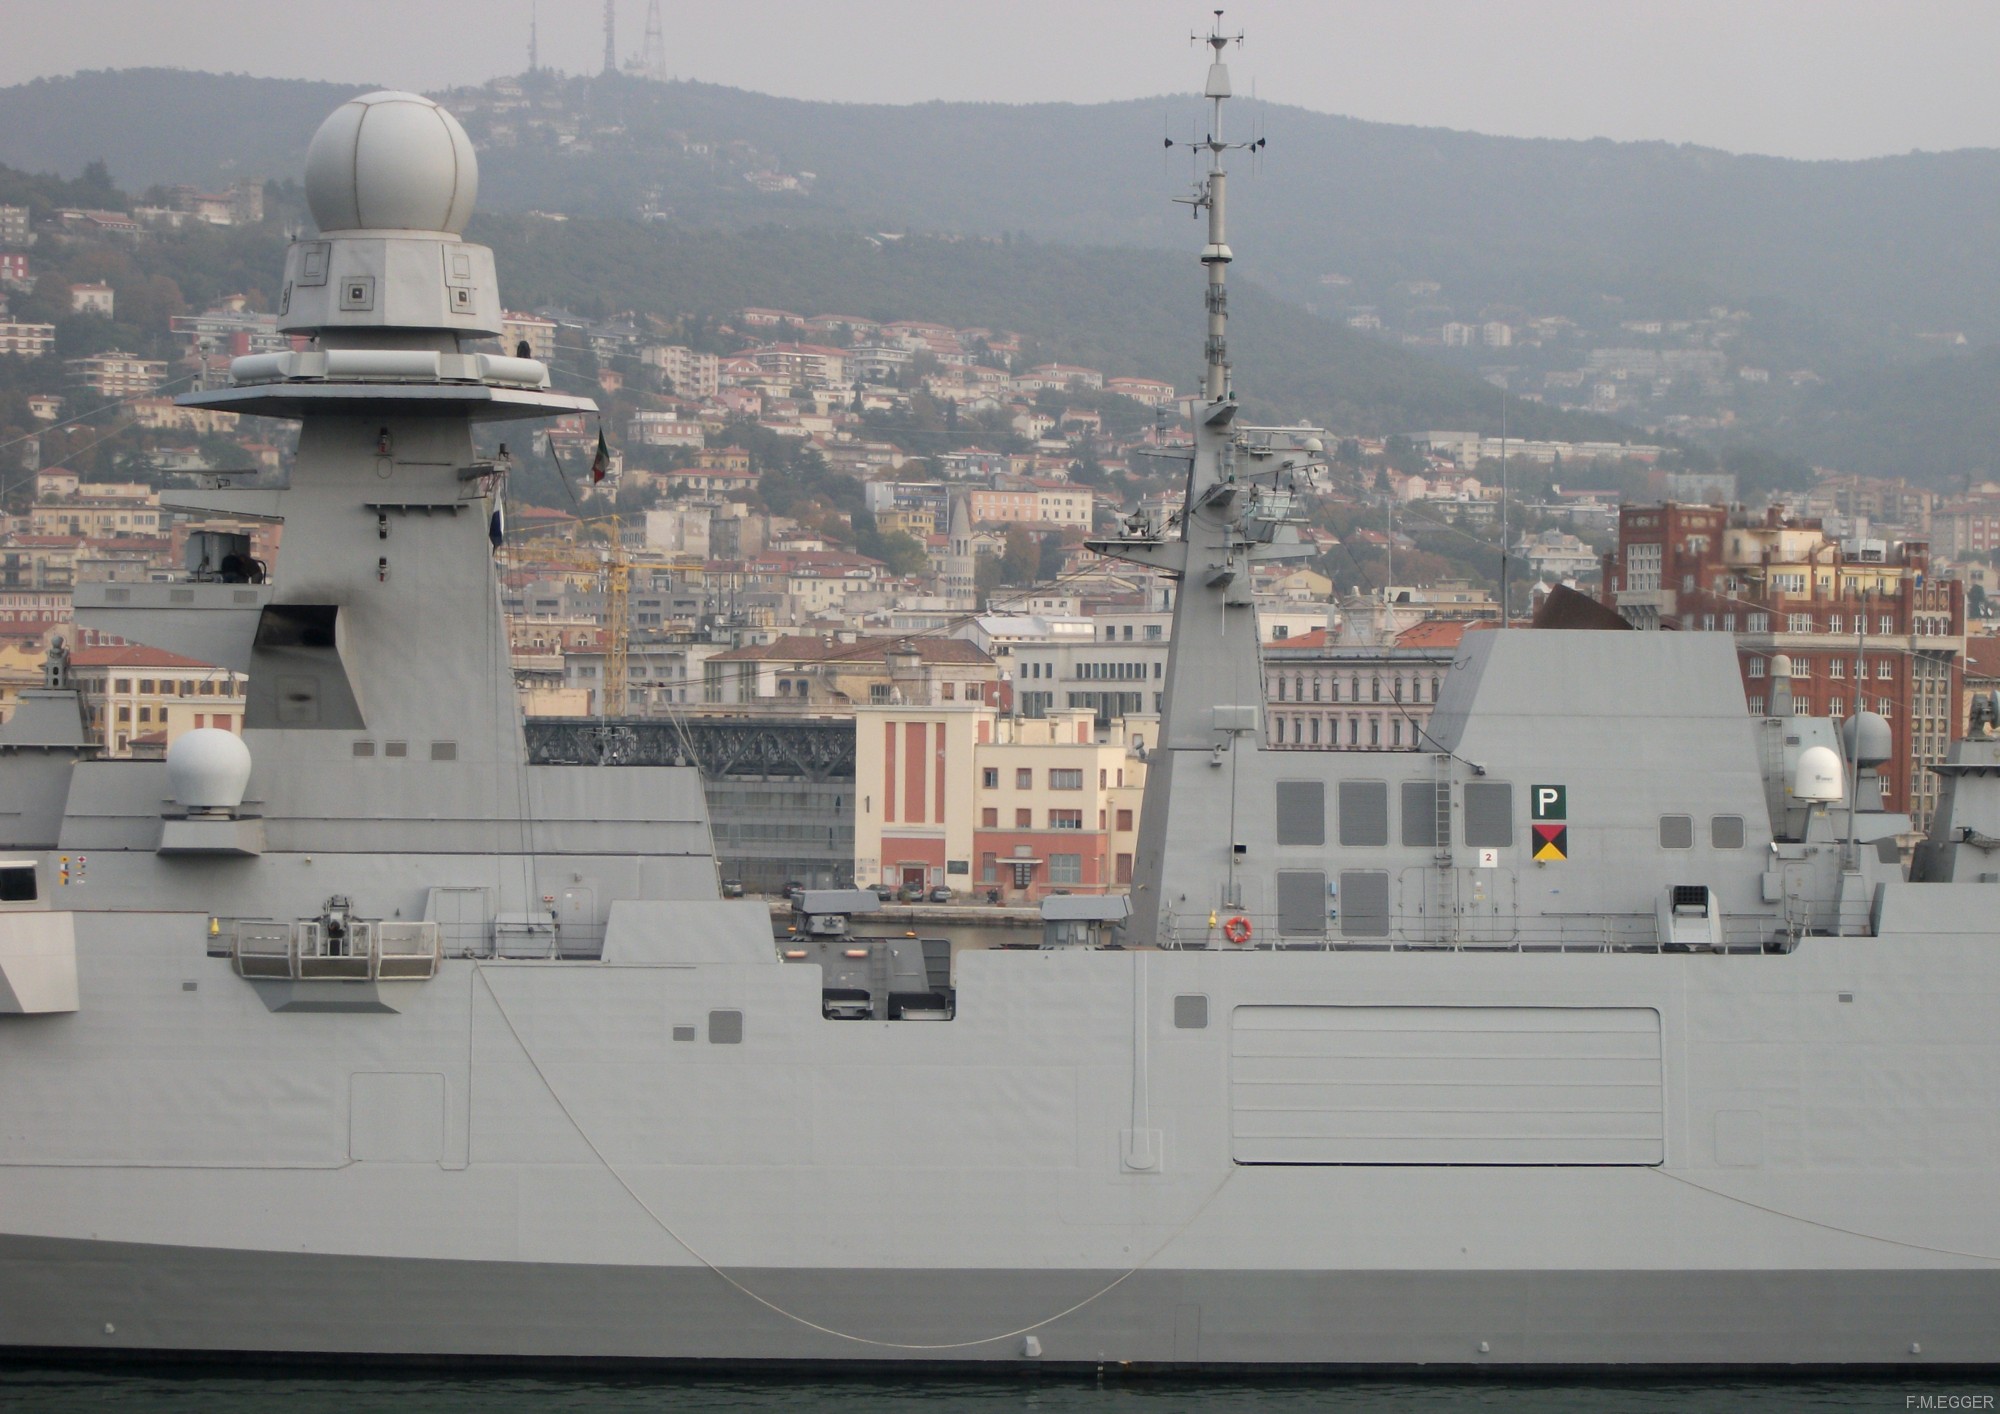 f-591 virginio fasan fremm bergamini class frigate italian navy marine militare 05 otomat teseo ssm missile milas asroc